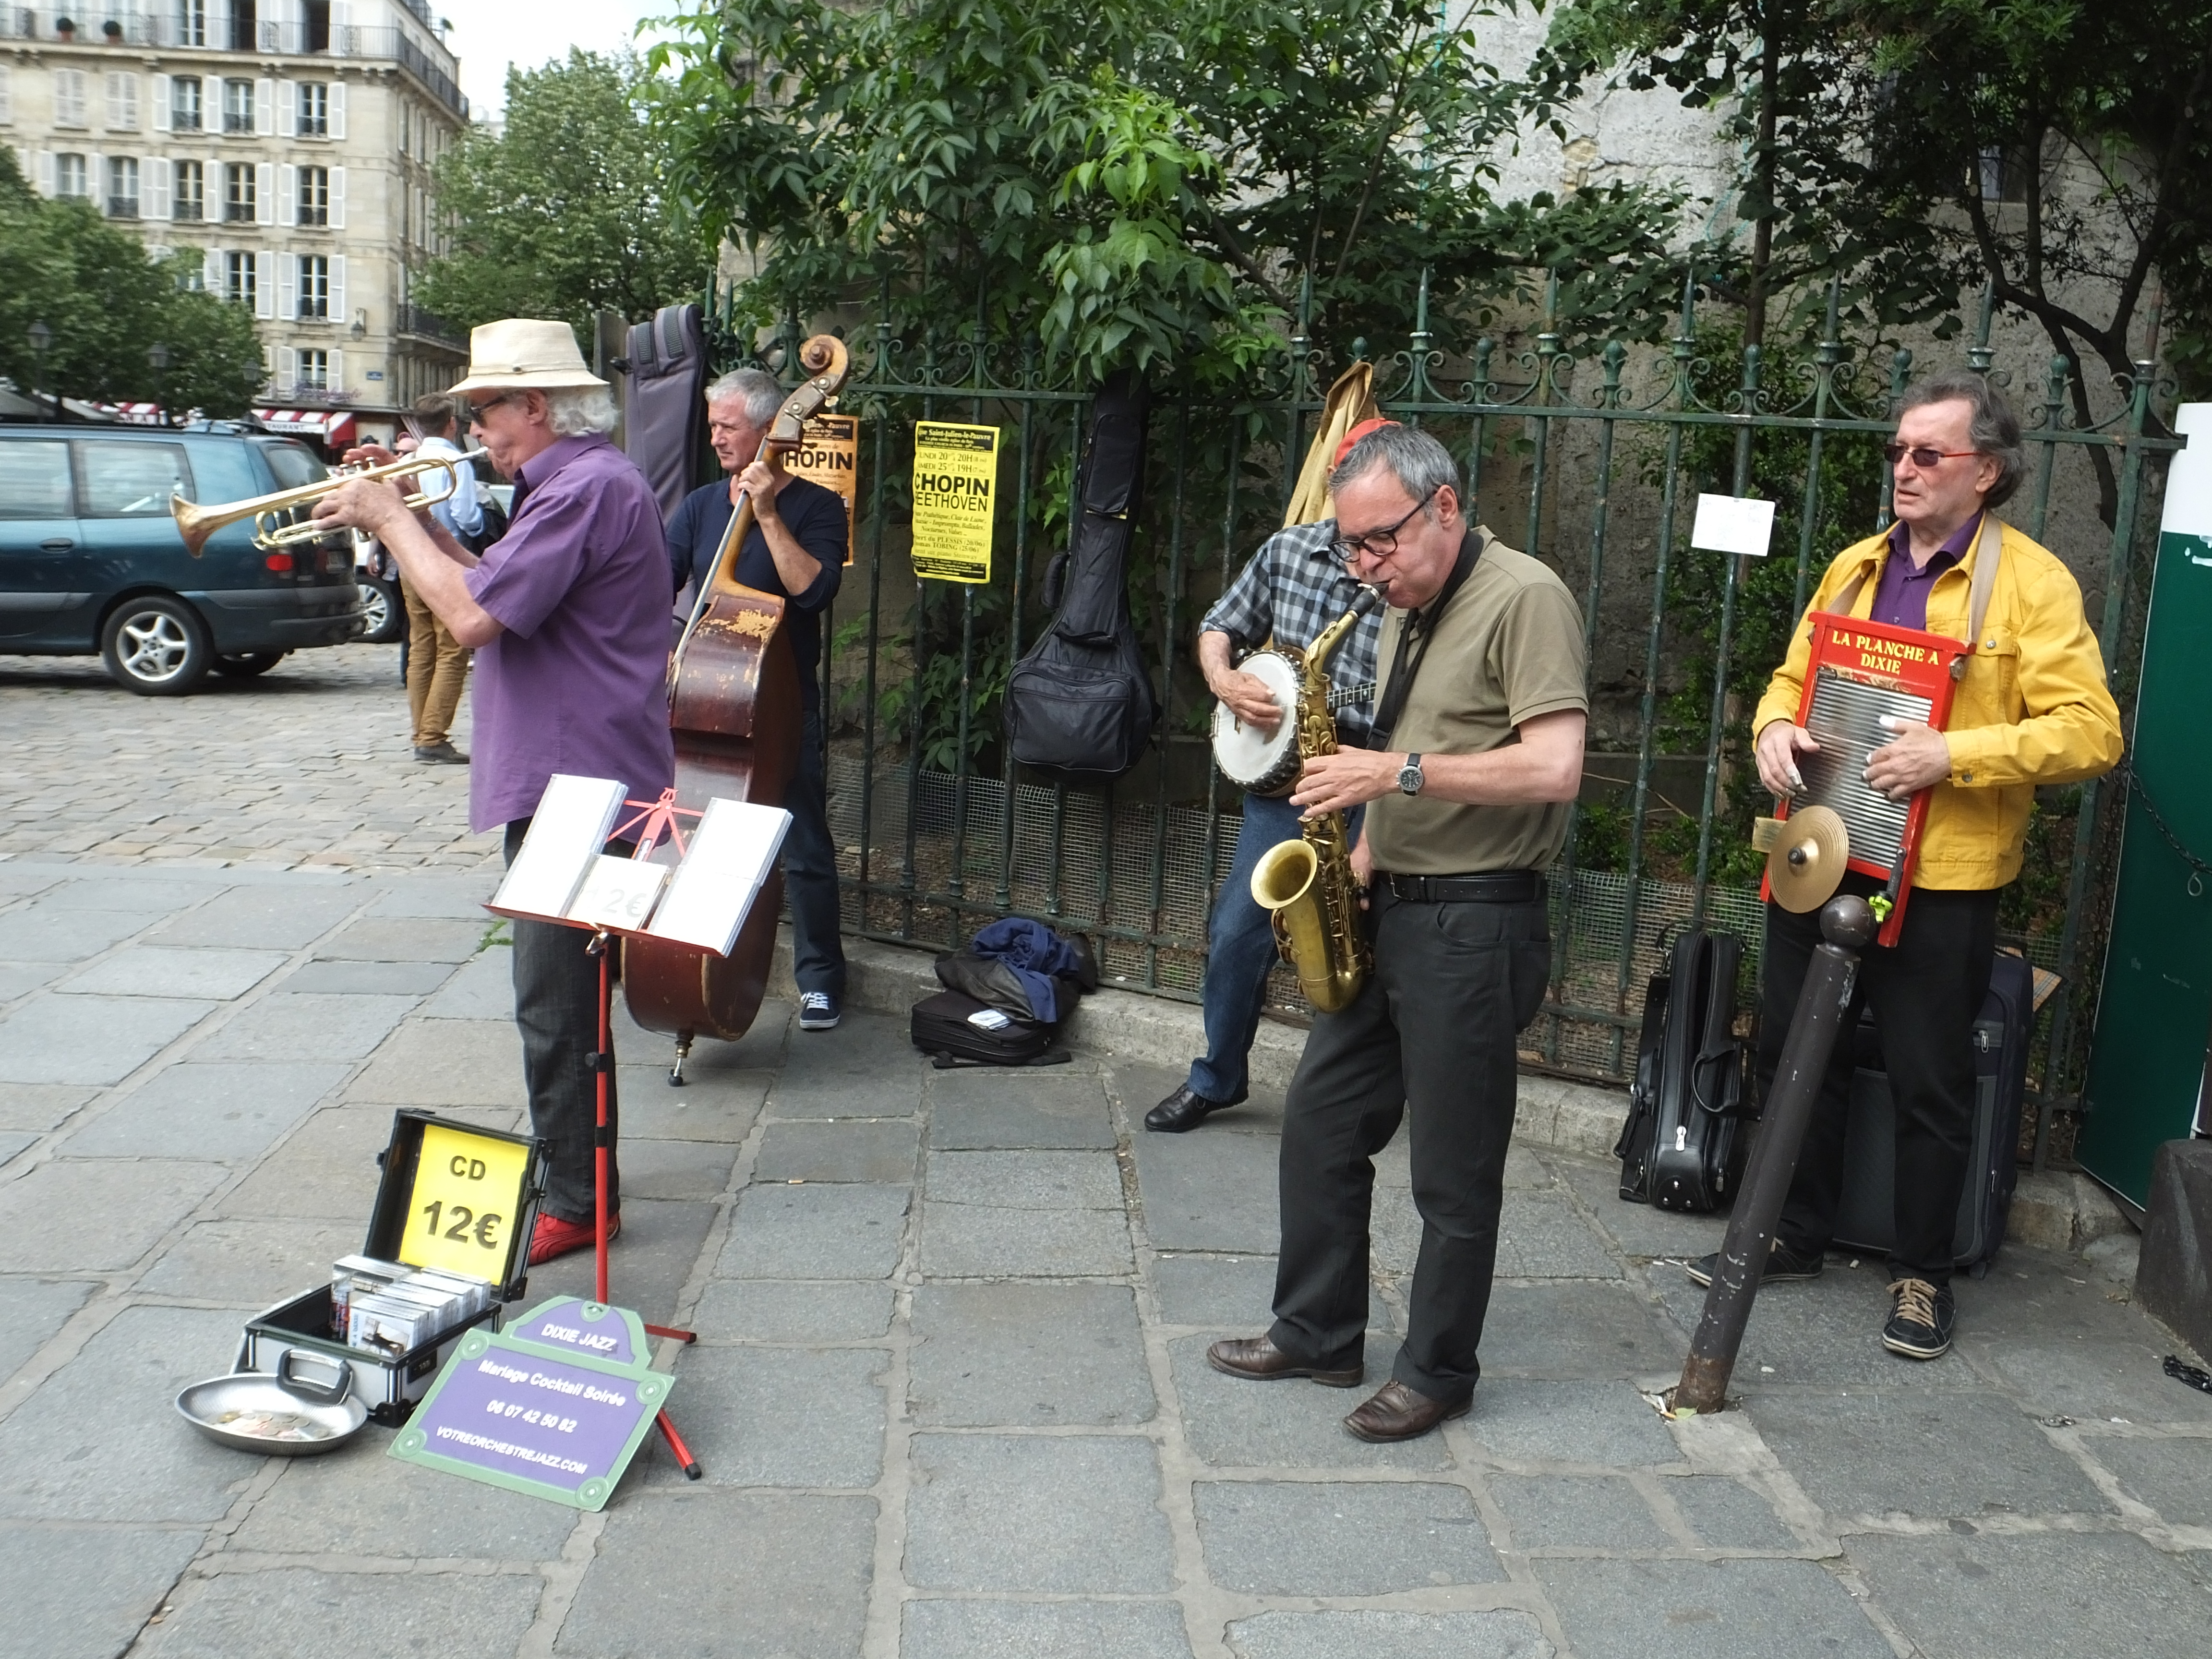 A fun street band